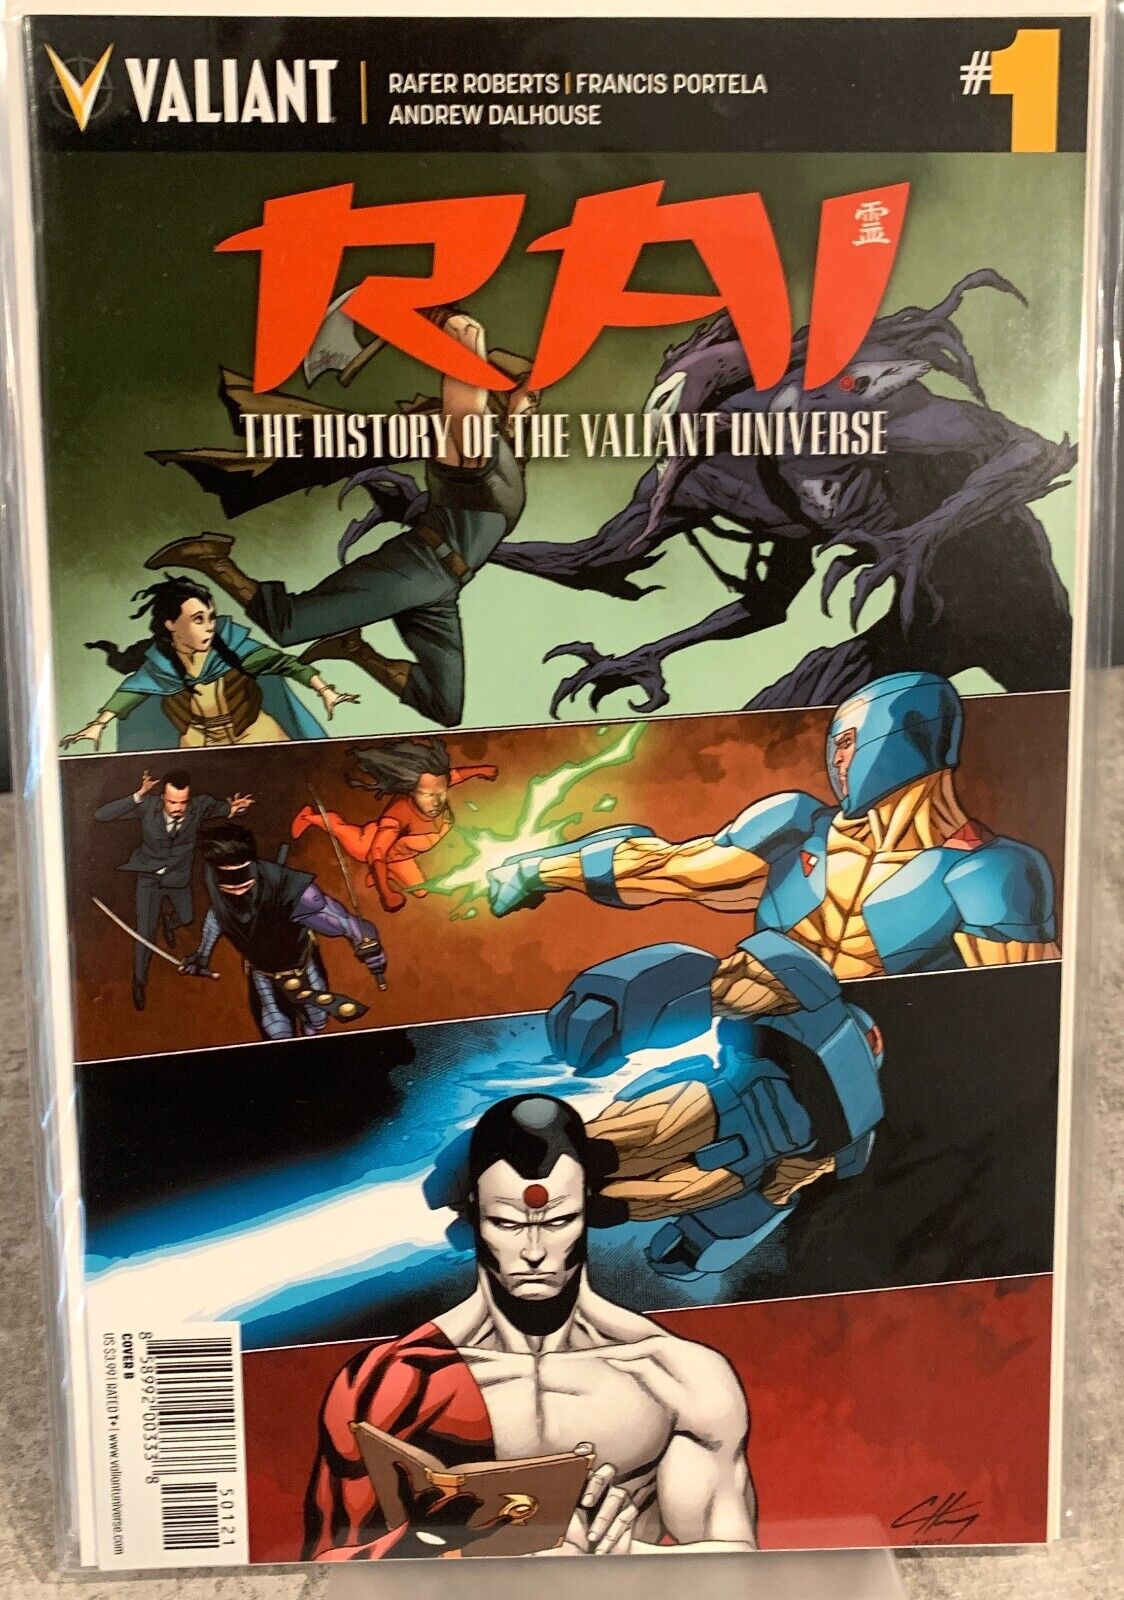 Rai: History of the Valiant Universe #1 (Valiant Ent., 2017) Variant Cover